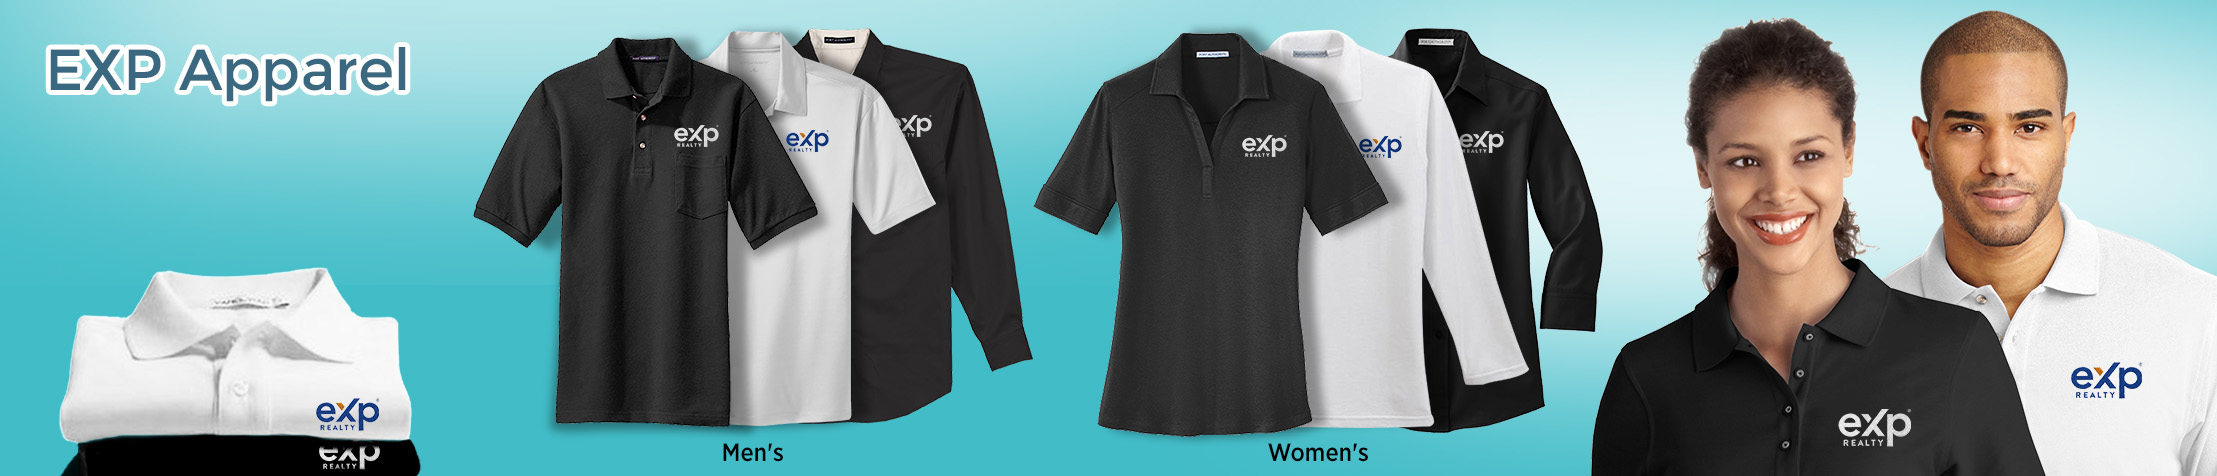 Real Estate Apparel - logo apparel | Men's & Women's shirts | BestPrintBuy.com